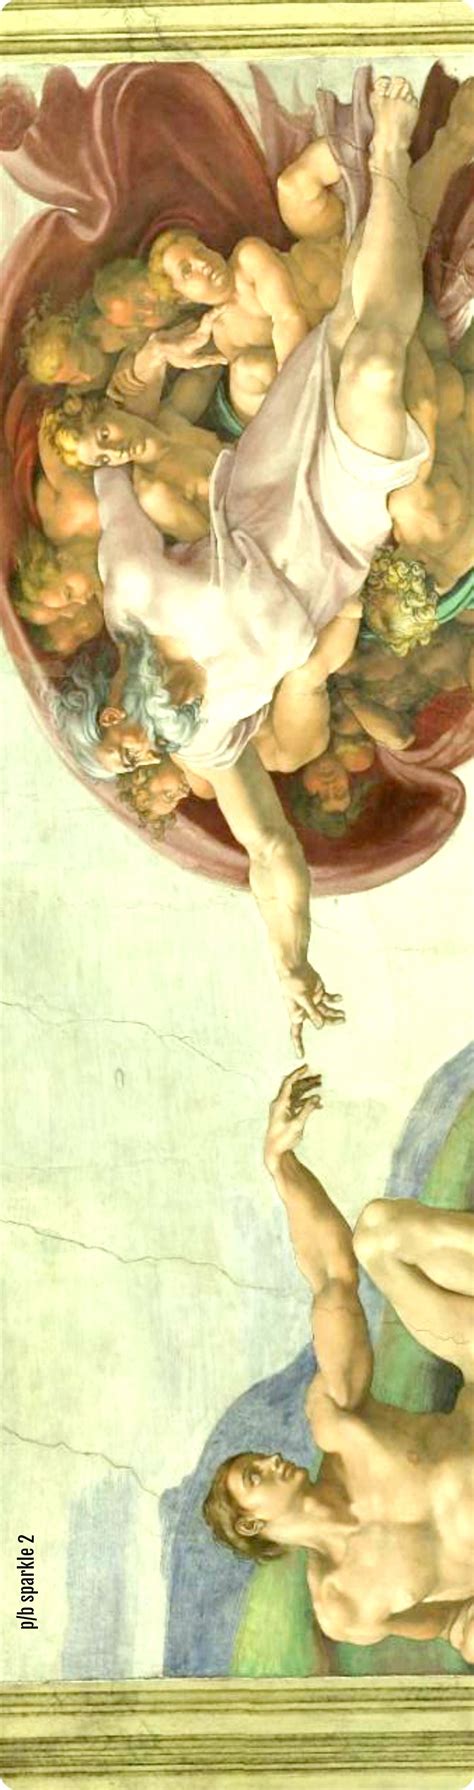 Michelangelo The Creation Of Adam Sistine Chapel Ceiling